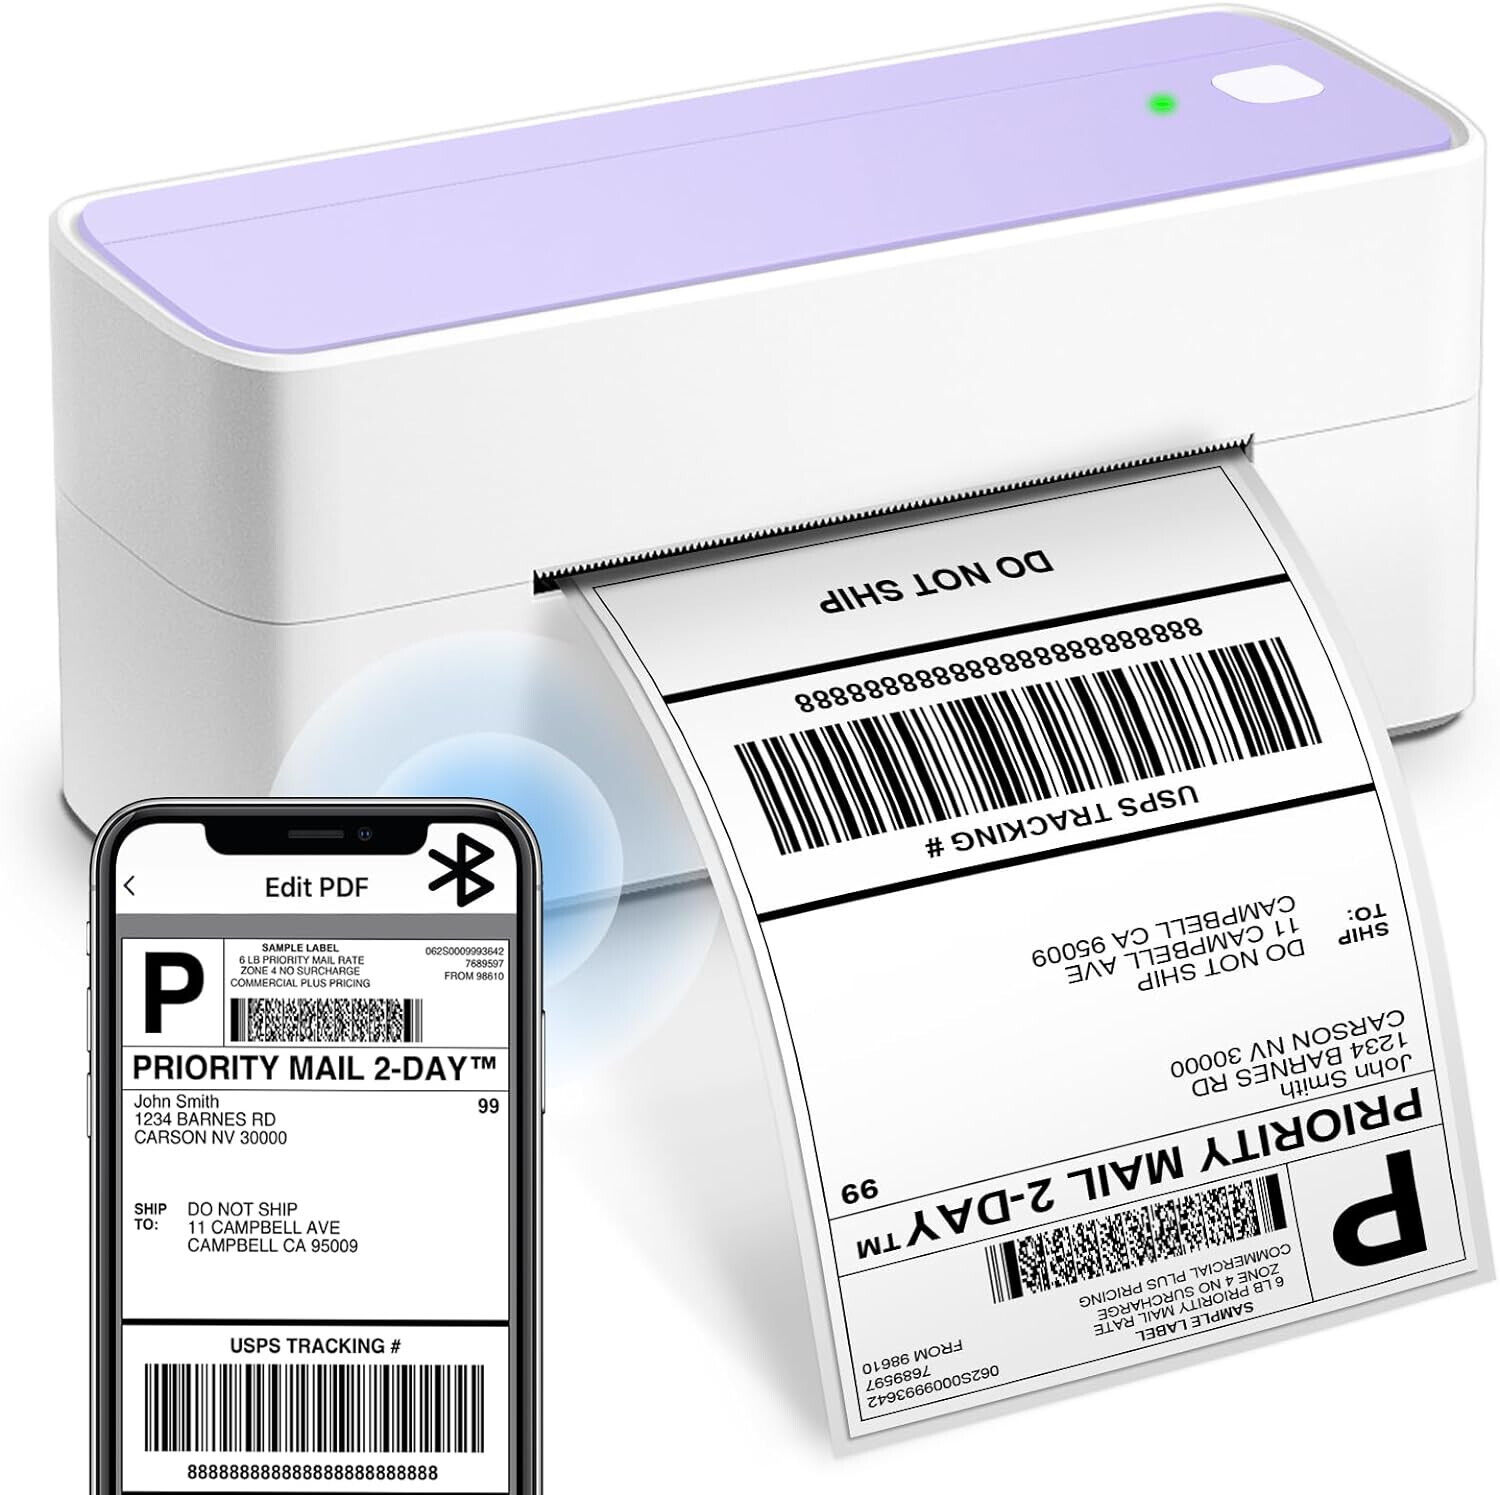 Omezizy Bluetooth Shipping Label Printer - Wireless Thermal Label Printer, 4x6